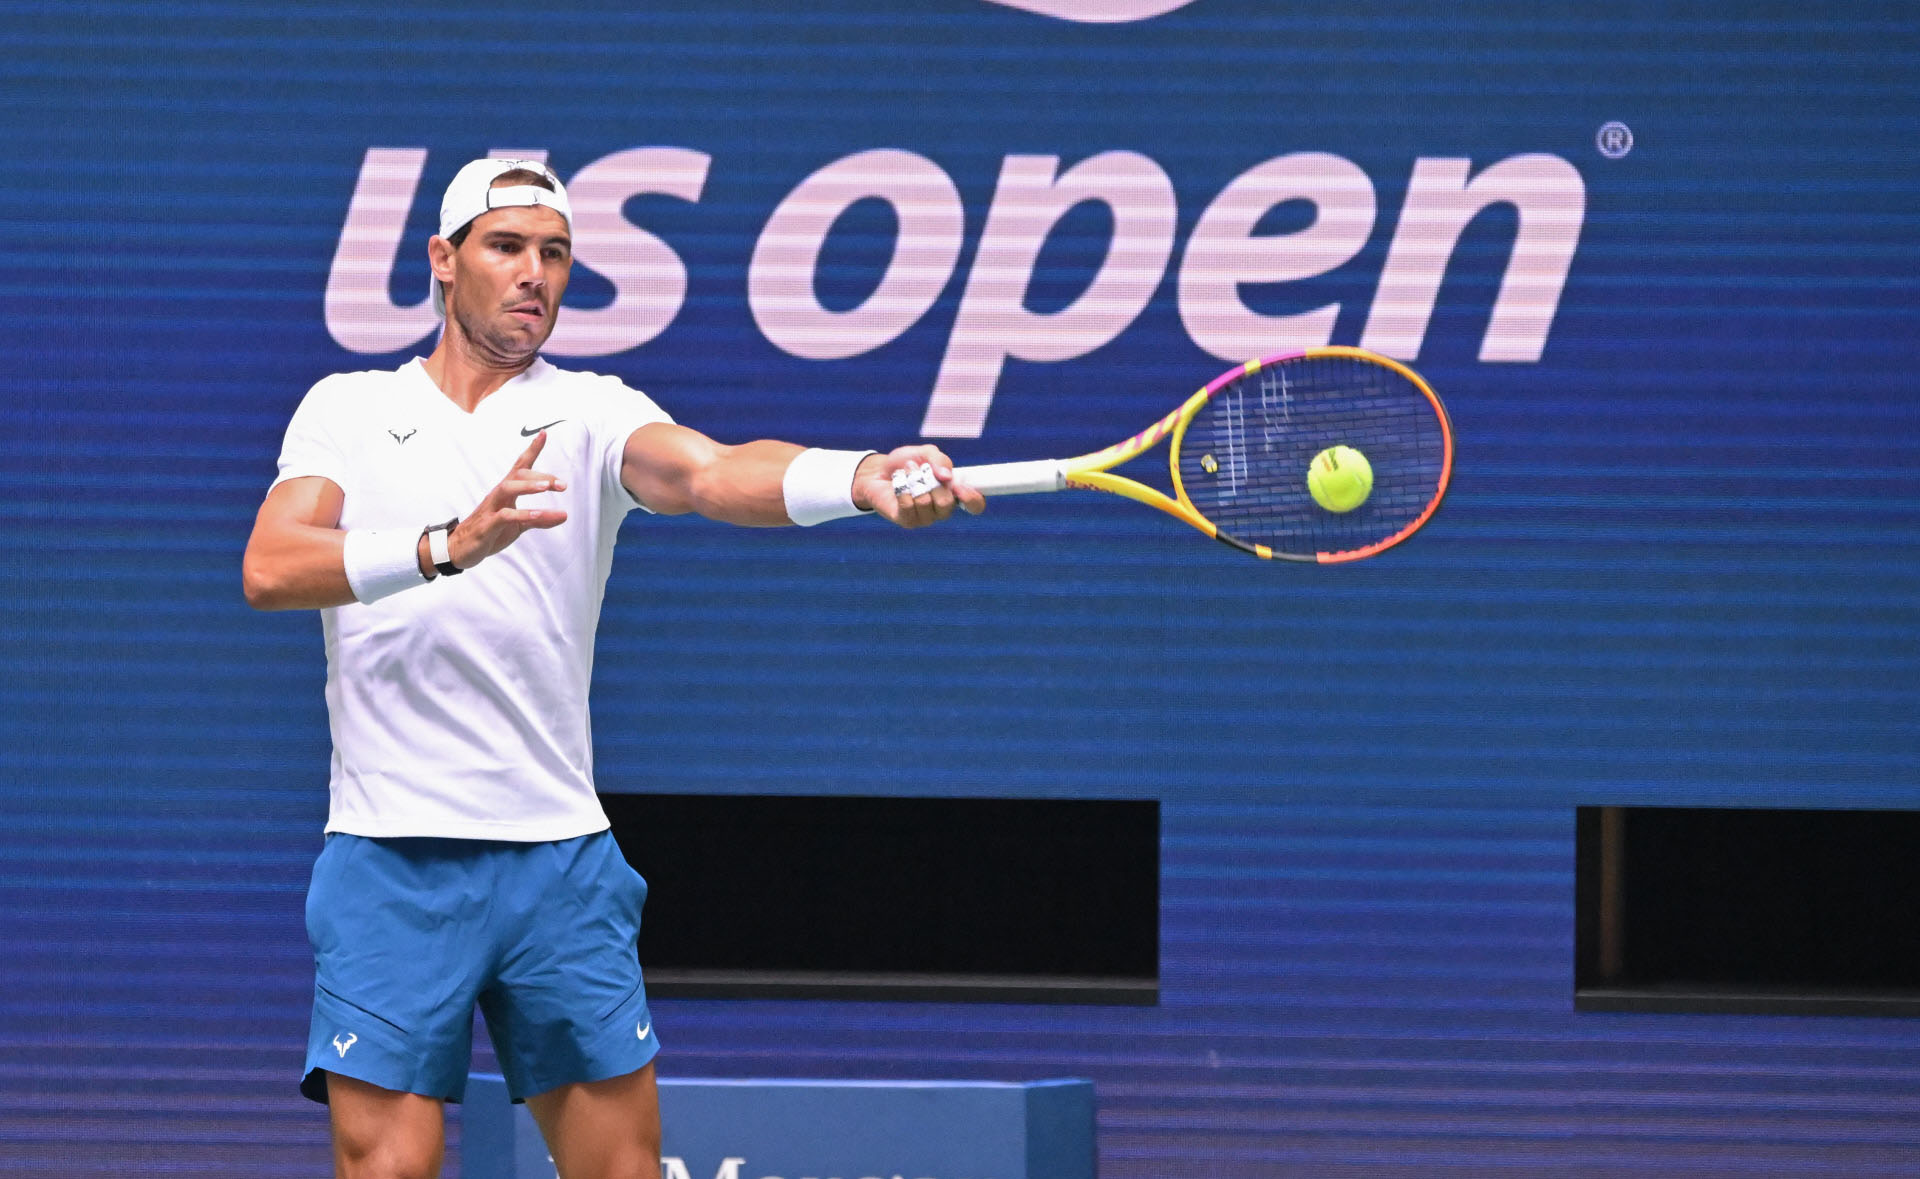 Tennispalyer Rafael Nadal training during Open USA in NYC.